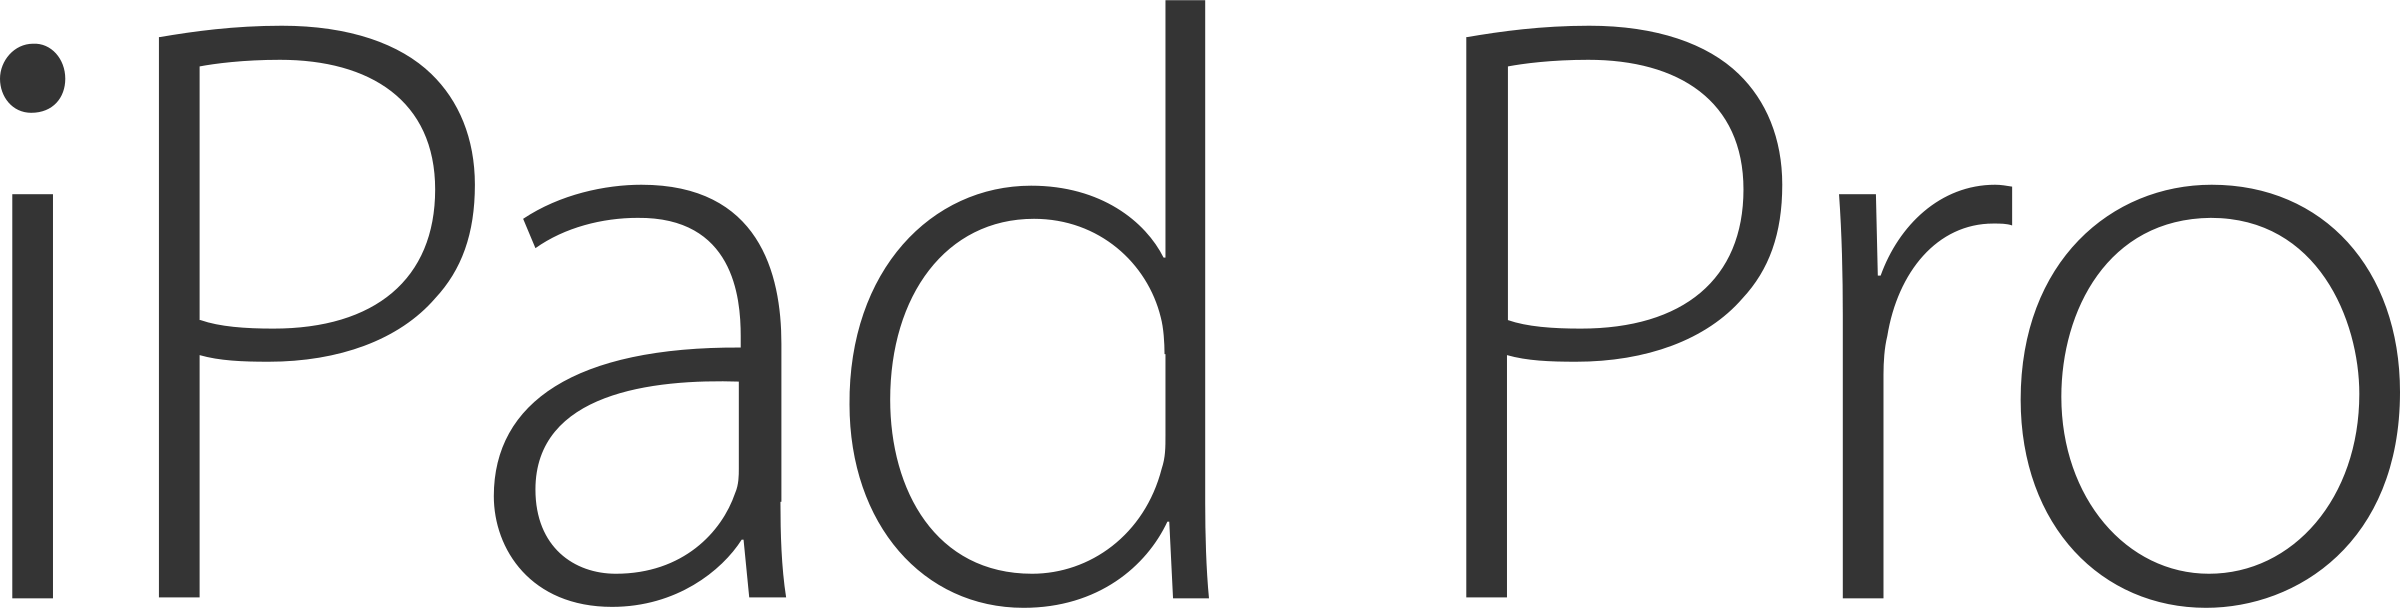 Ipad Pro Logo Logo Black And White - Ipad (2400x608)